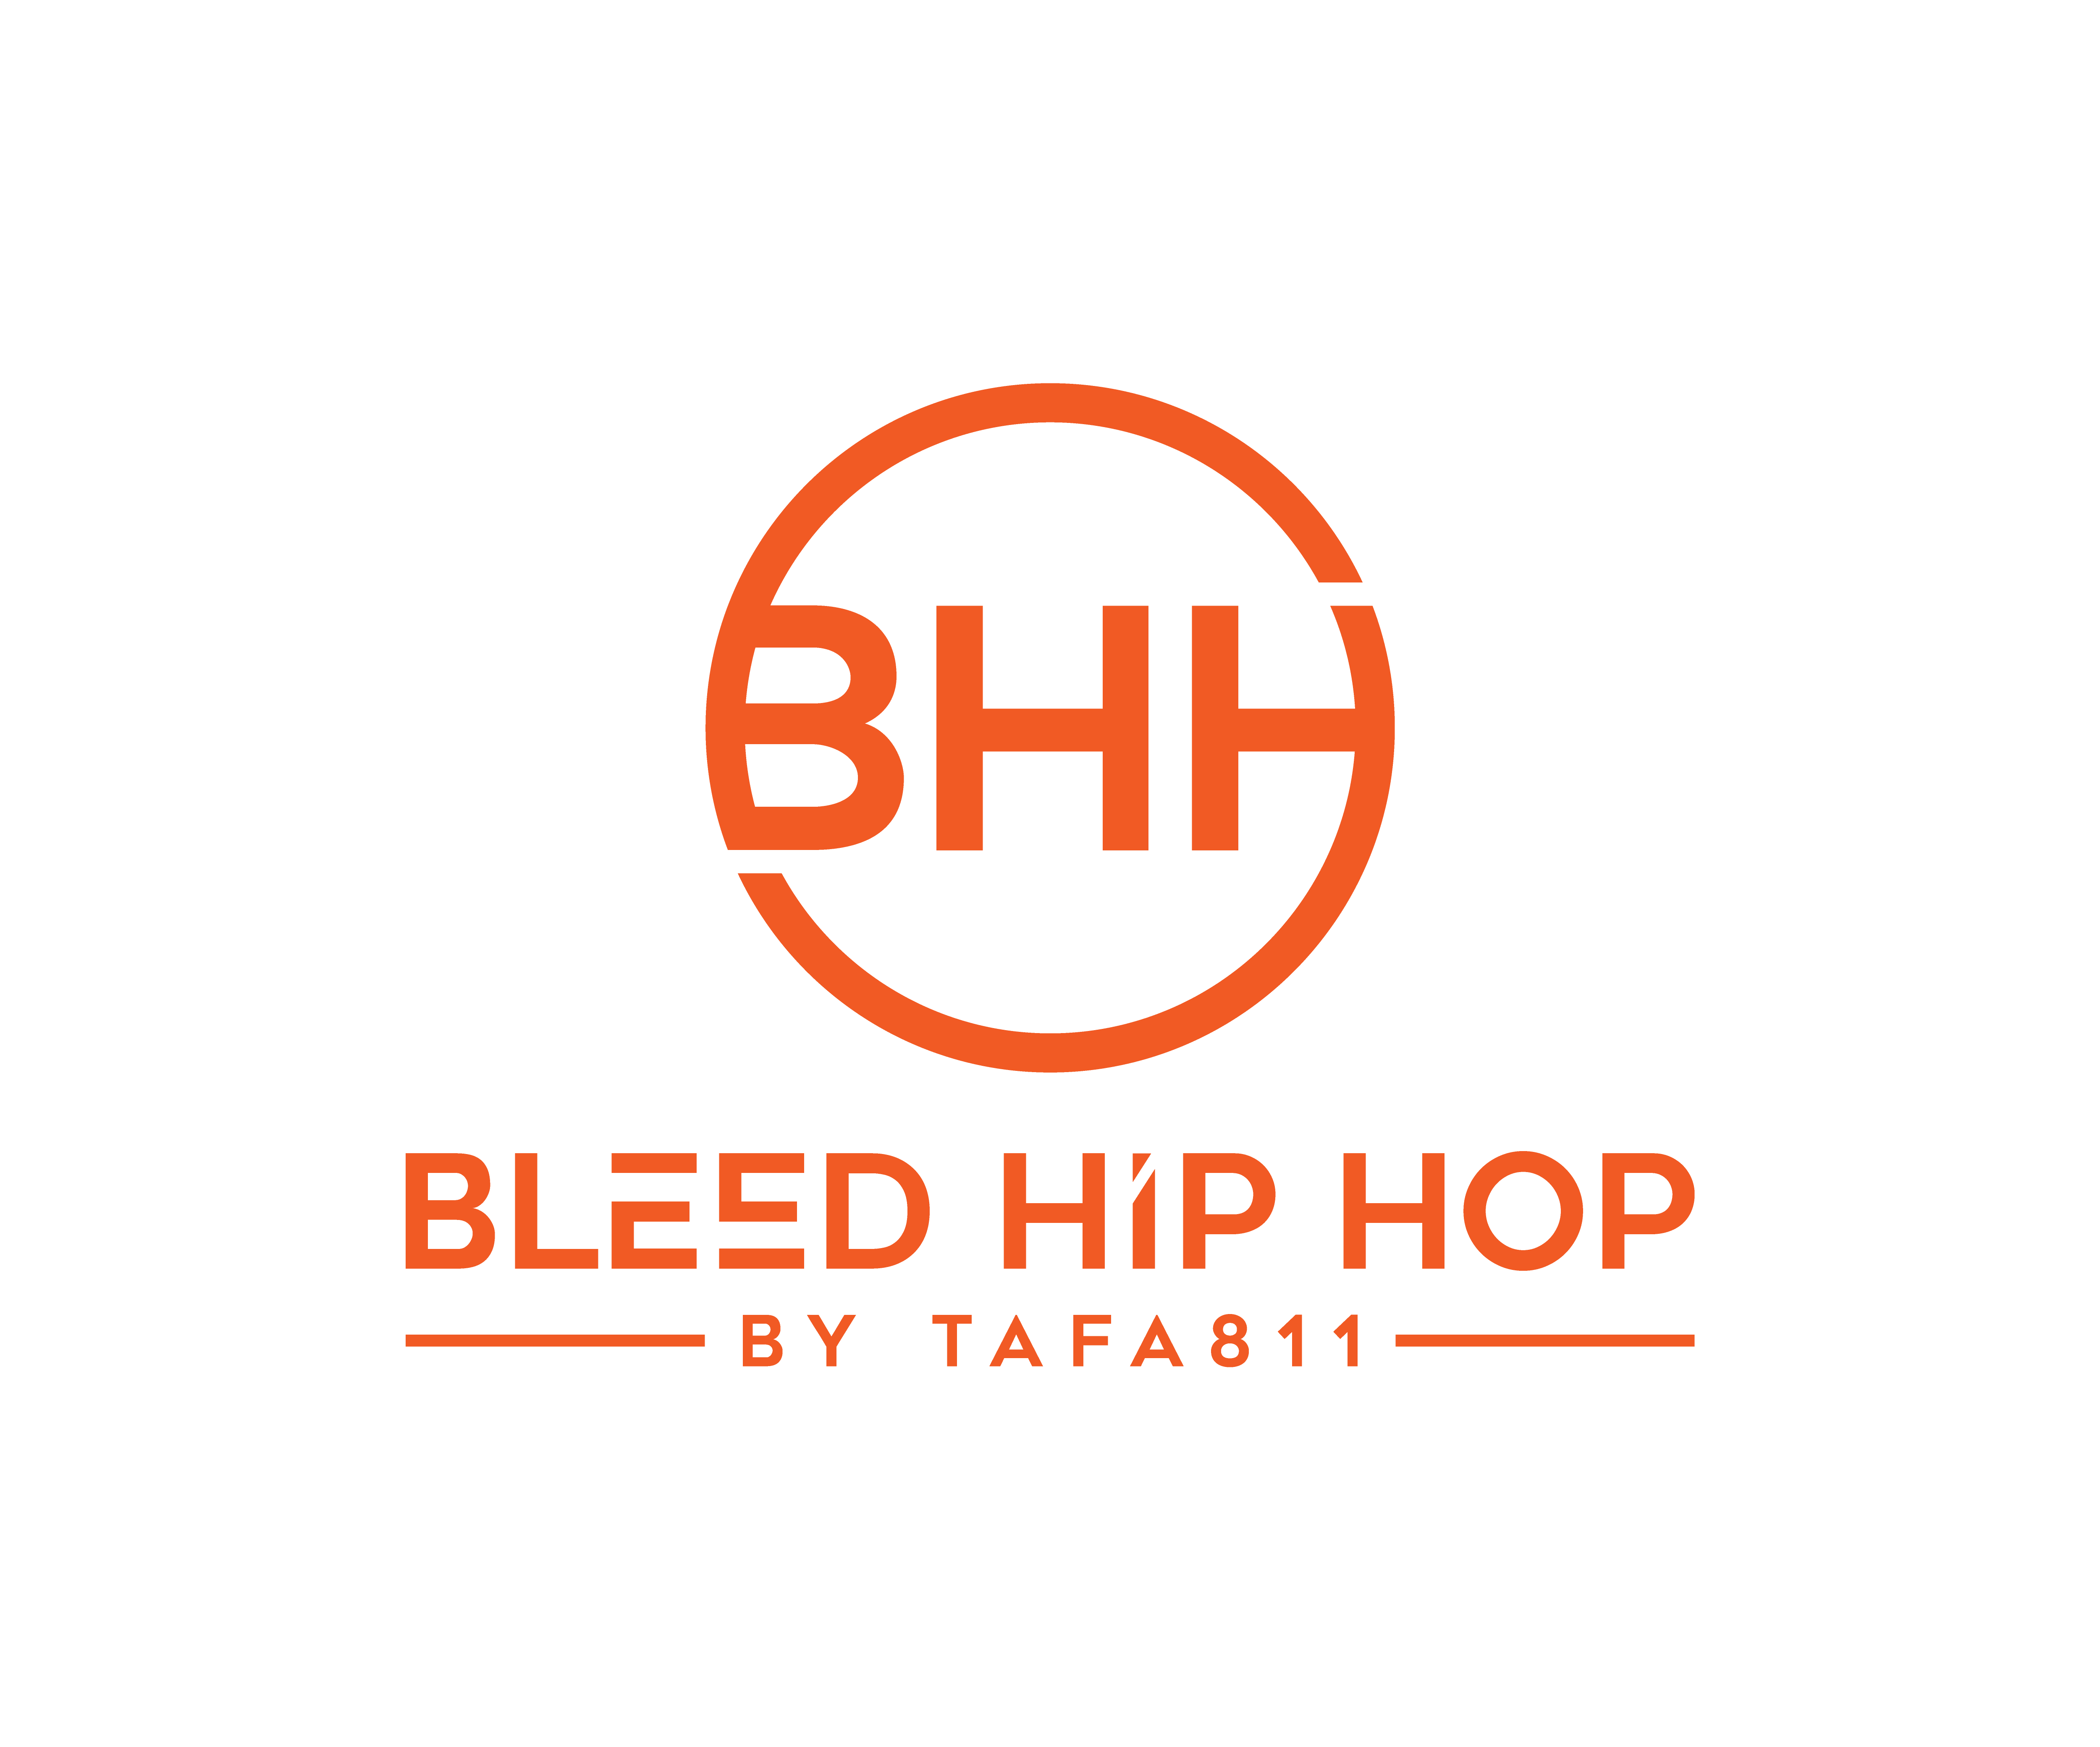 Bleed Hip Hop – My WordPress Blog